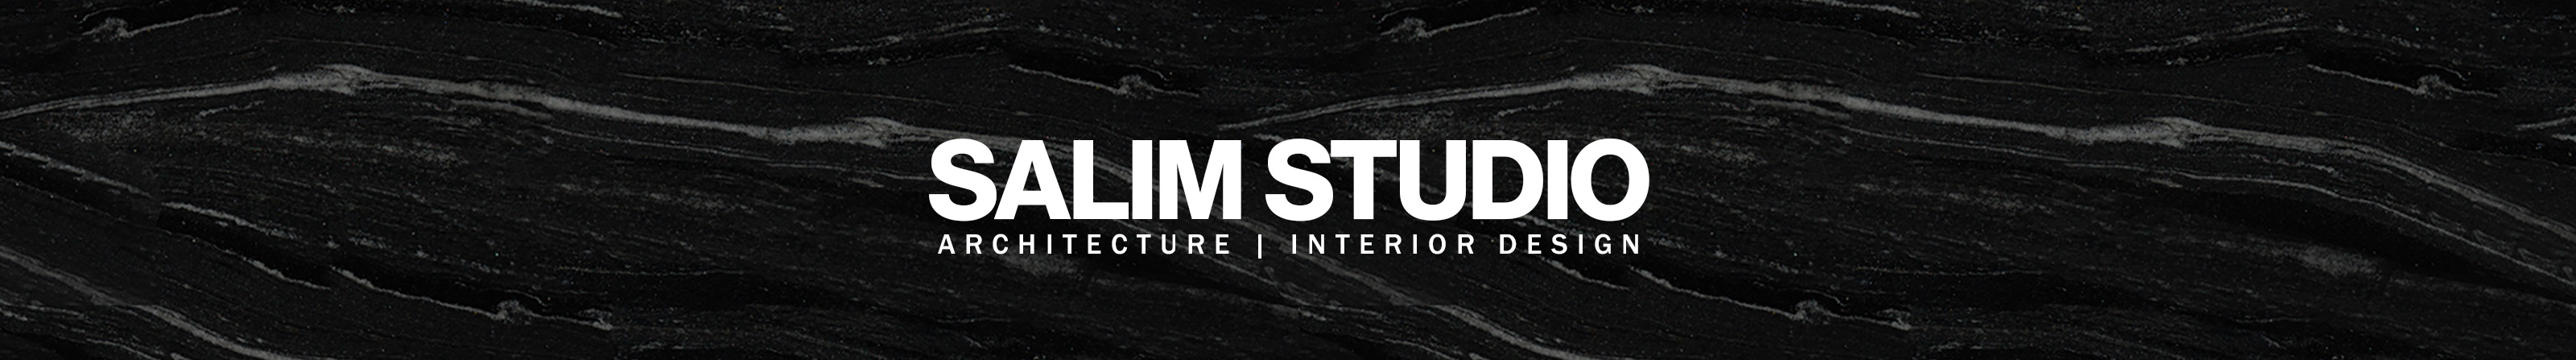 SALIM STUDIO's profile banner